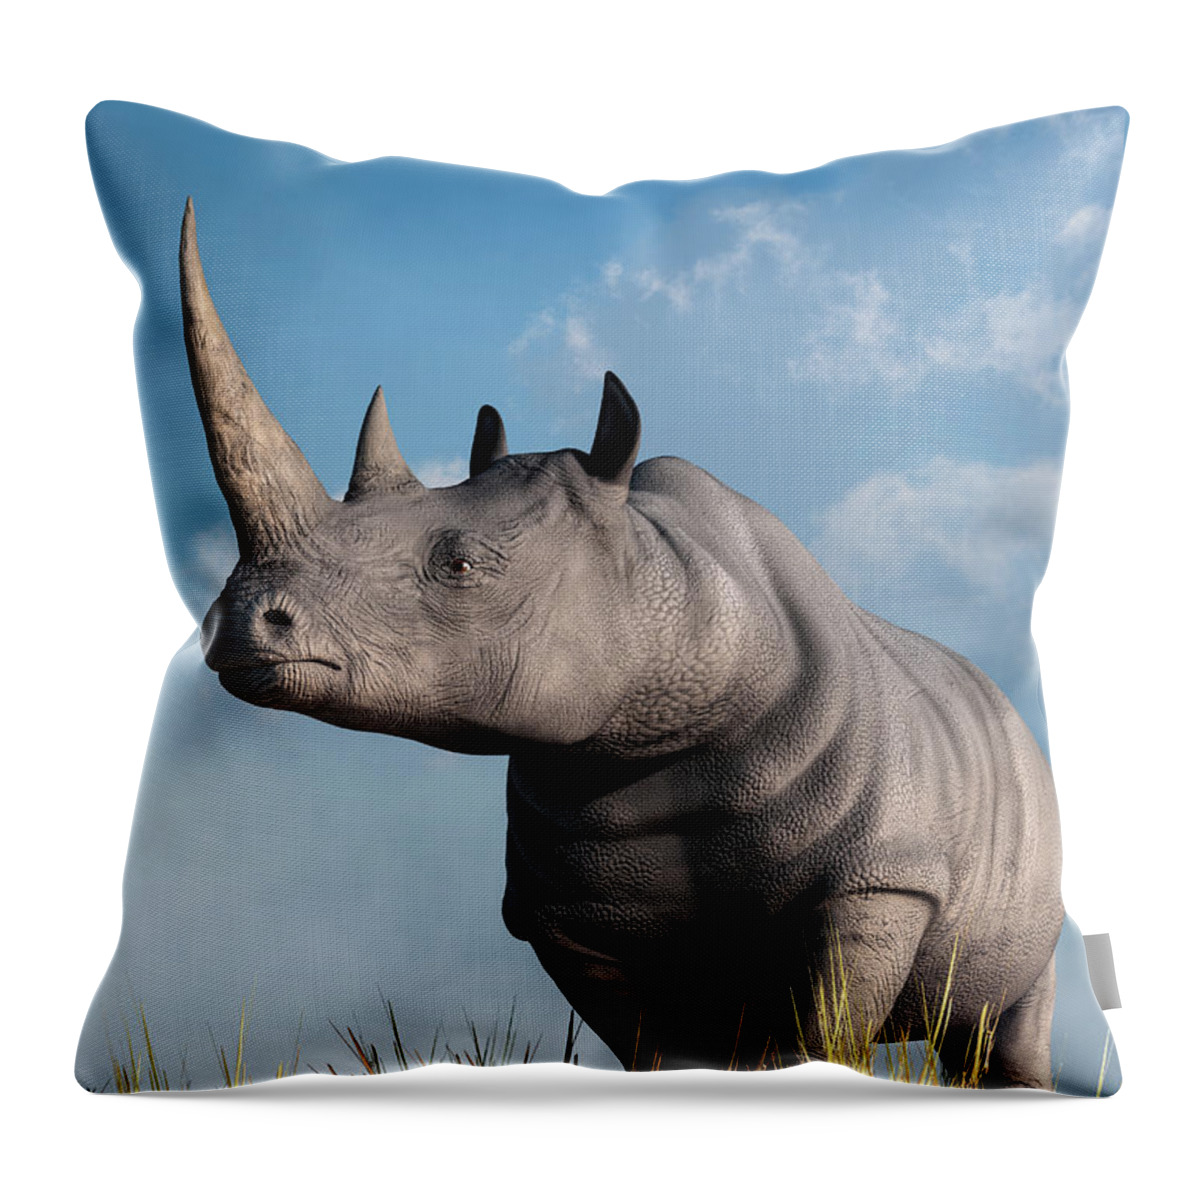 Rhino Throw Pillow featuring the digital art Rhino #2 by Daniel Eskridge